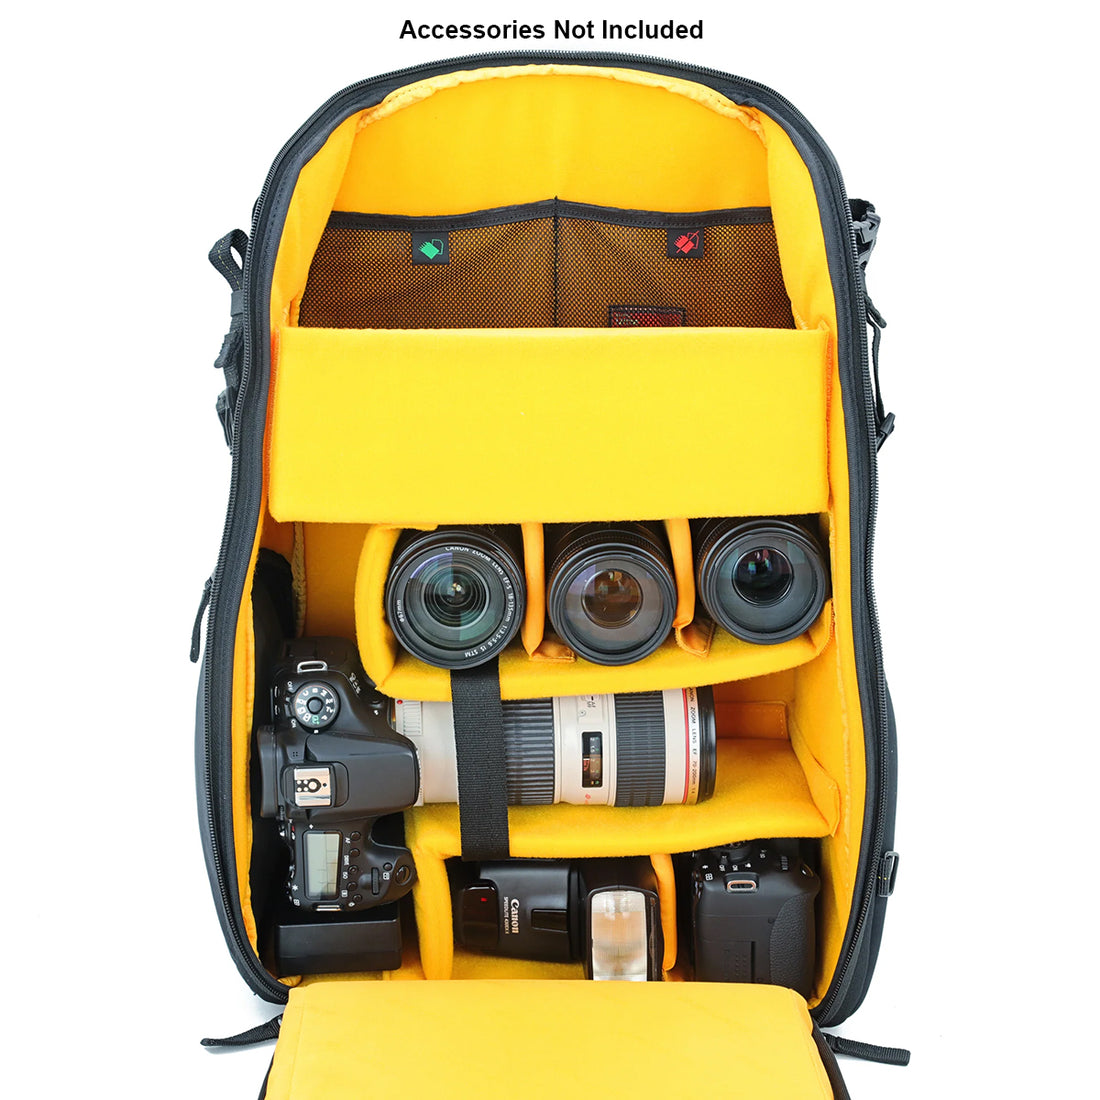 Vanguard Mochila Alta Rise 48 Camera Backpack designed for 1-2 Pro Camera&